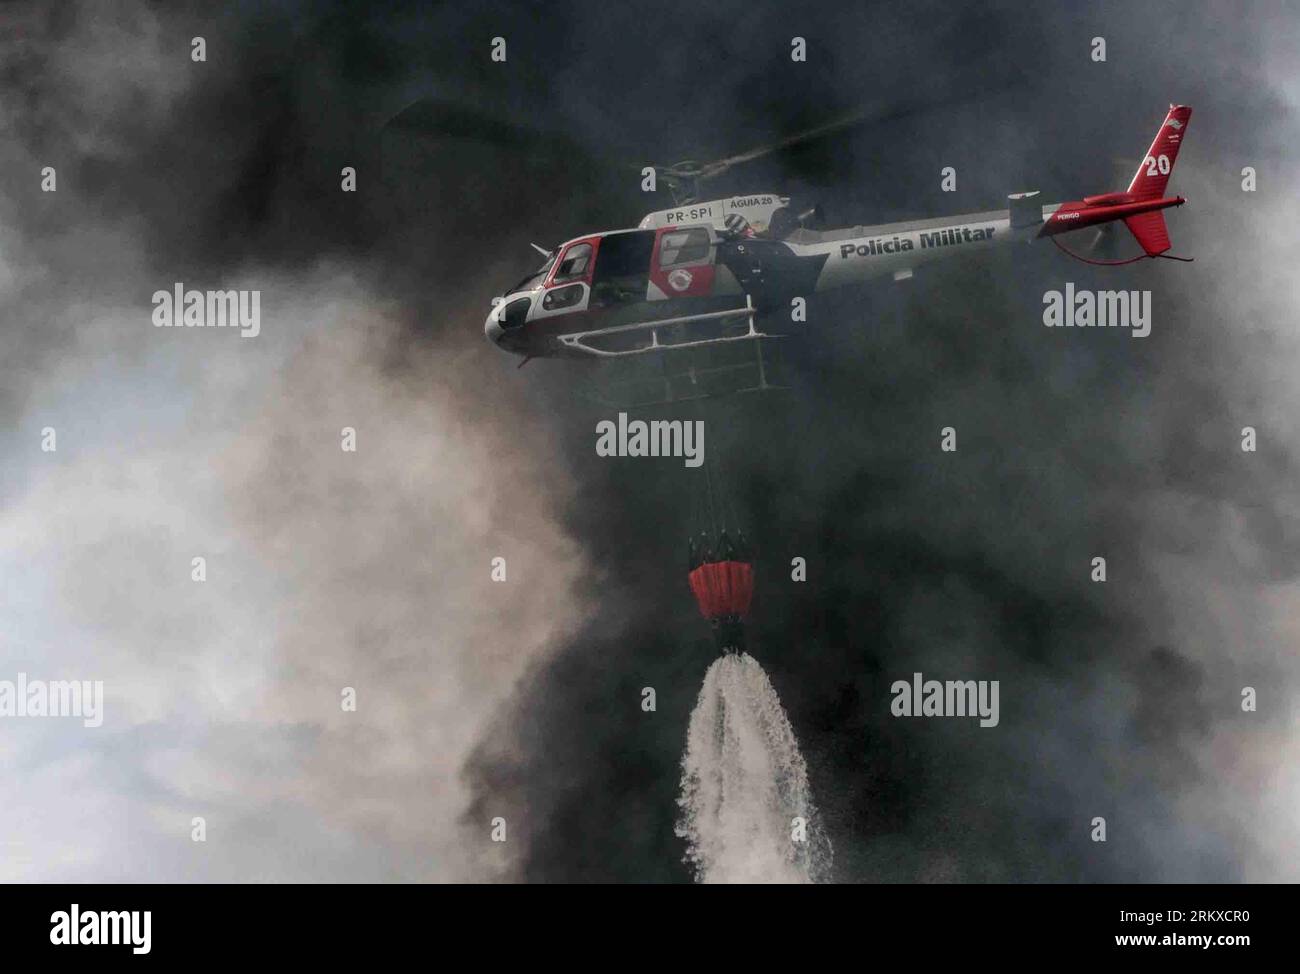 Bildnummer: 58946834  Datum: 22.12.2012  Copyright: imago/Xinhua A helicopter sprays water over a fire in a mattress factory, in the district of Vila Mariana, Ribeirao Preto, Sao Paulo, Brazil, on Dec. 22, 2012. (Xinhua/Alfredo Risk/Futura Press/Agencia Estado)(zyw) BRAZIL OUT BRAZIL-SAN PAULO-MATTRESS FACTORY-FIRE PUBLICATIONxNOTxINxCHN Gesellschaft Brand Feuer Löschen Feuerwehr Luft Helikopter Rauch x0x xds 2012 quer     58946834 Date 22 12 2012 Copyright Imago XINHUA a Helicopter Sprays Water Over a Fire in a mattress Factory in The District of Vila Mariana  Preto Sao Paulo Brazil ON DEC 22 Stock Photo